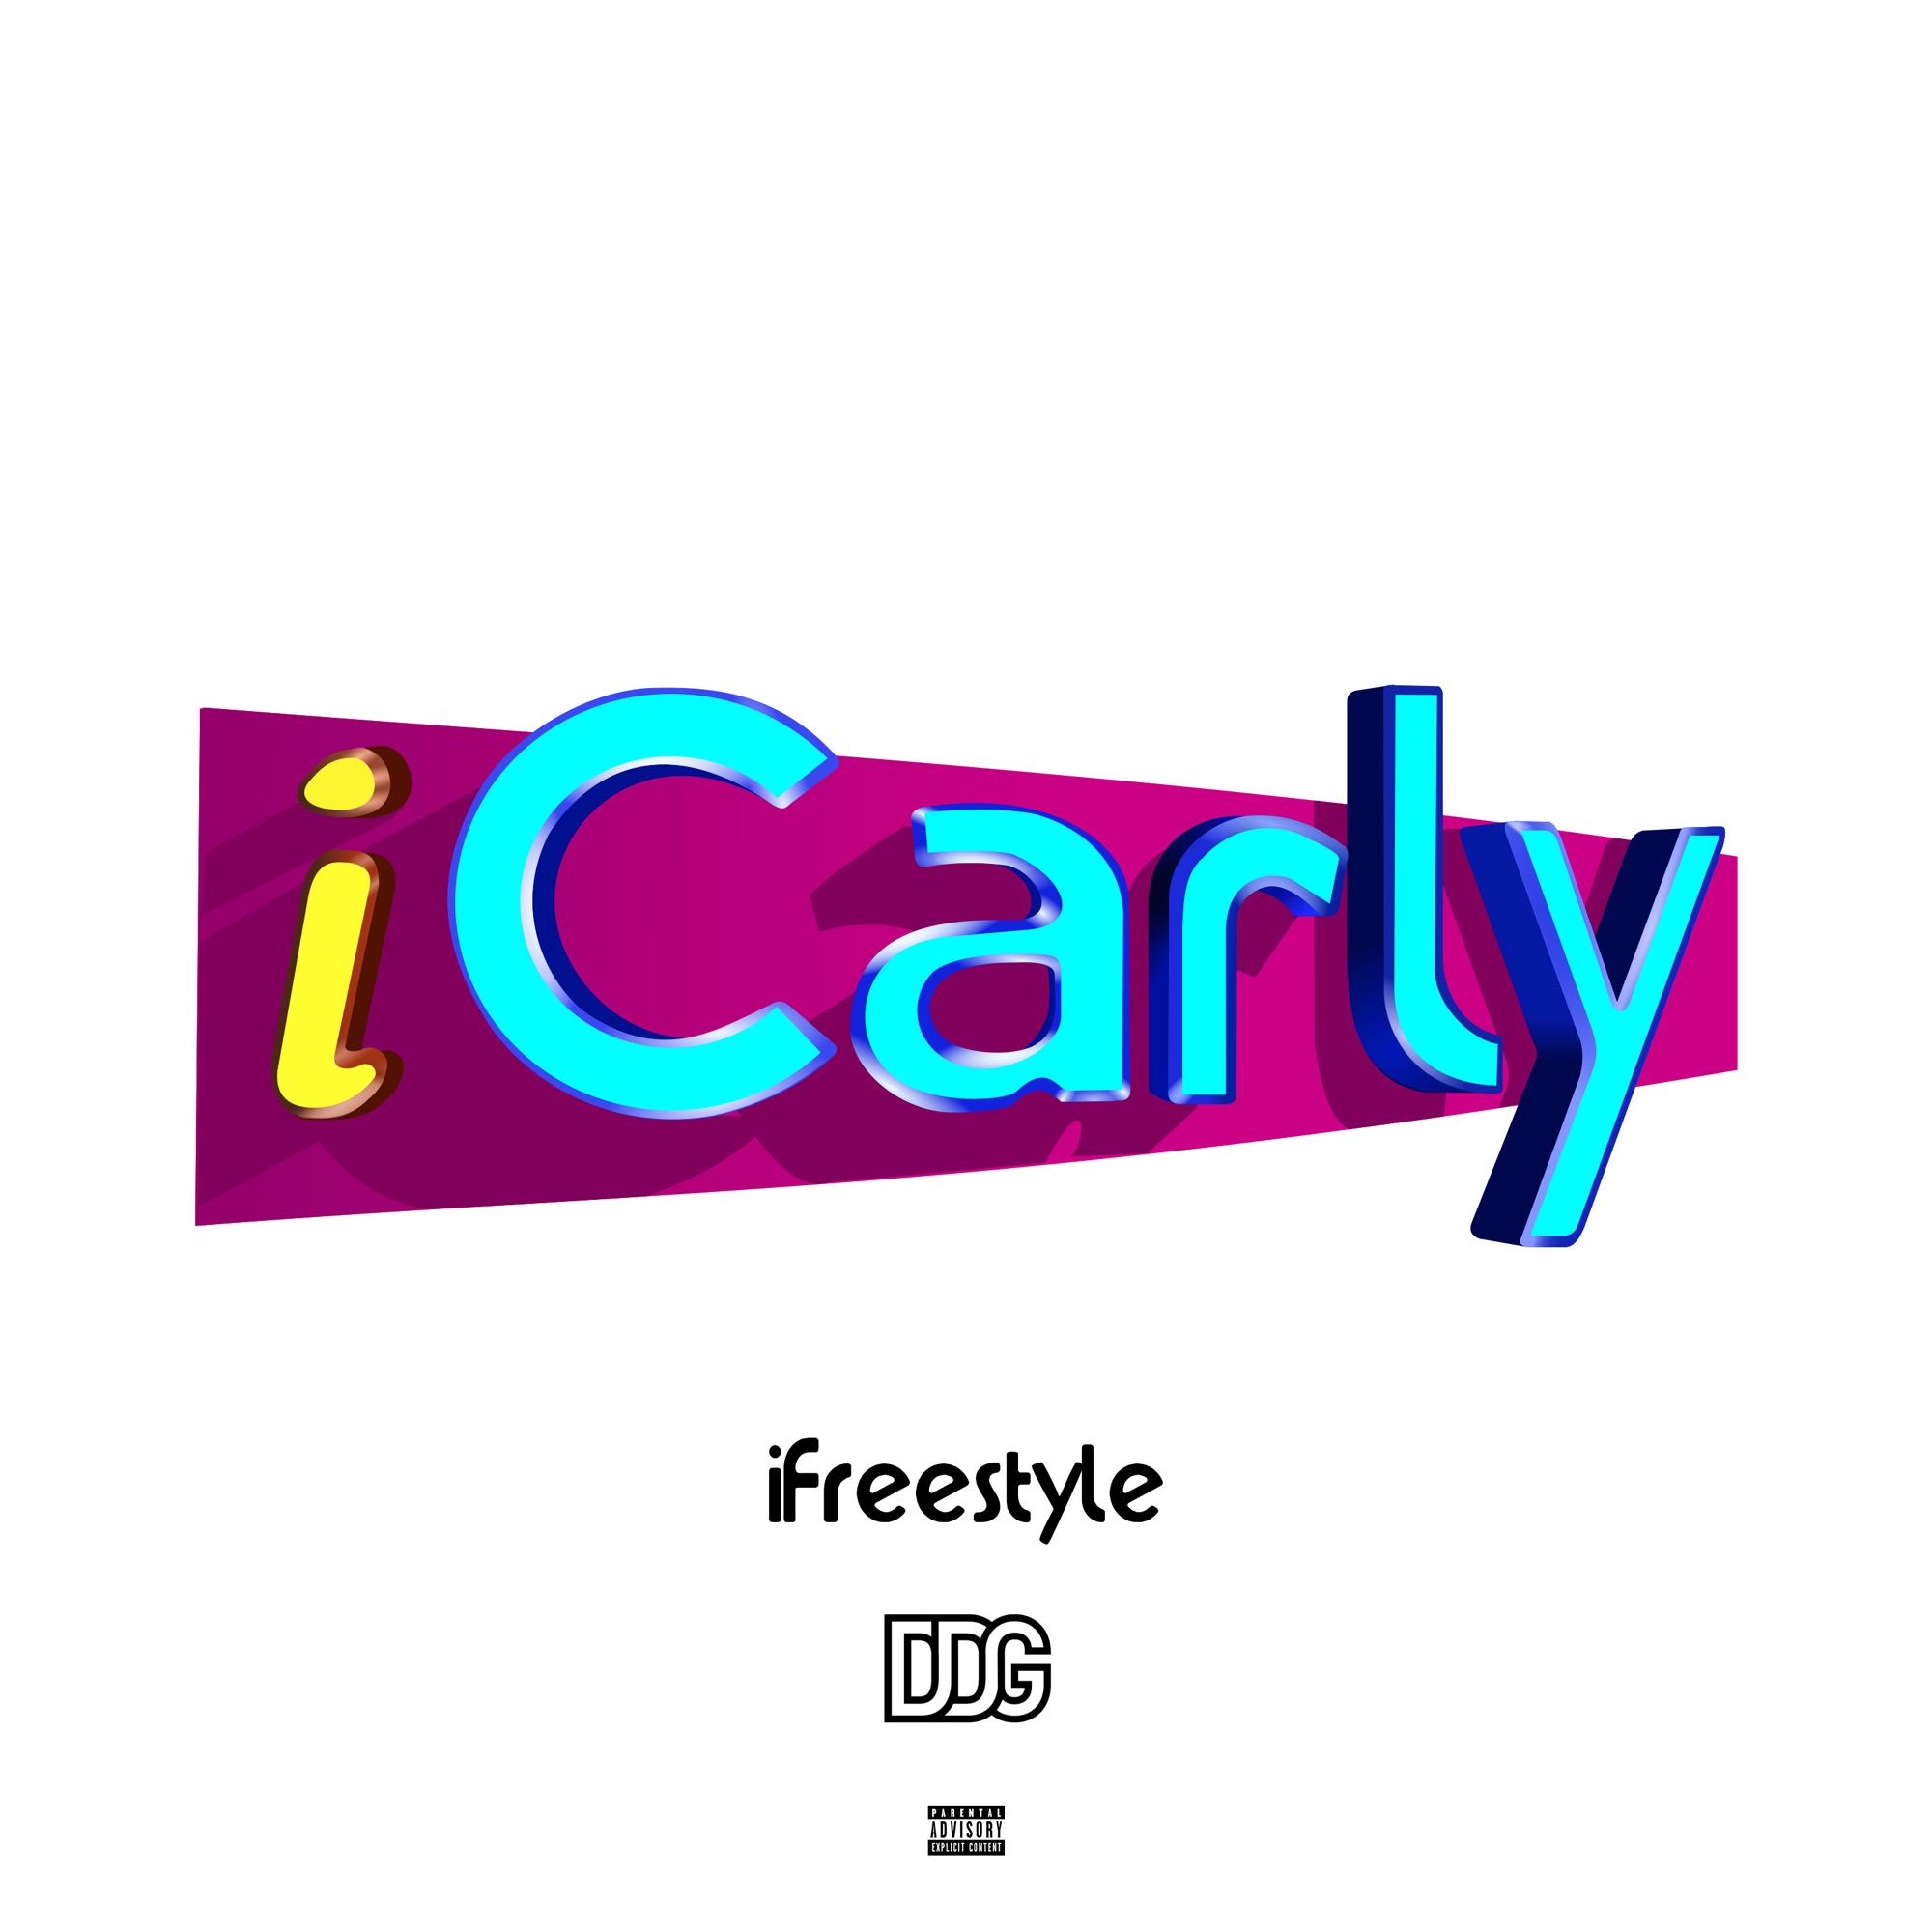 DDG - Icarly (Freestyle) - Single